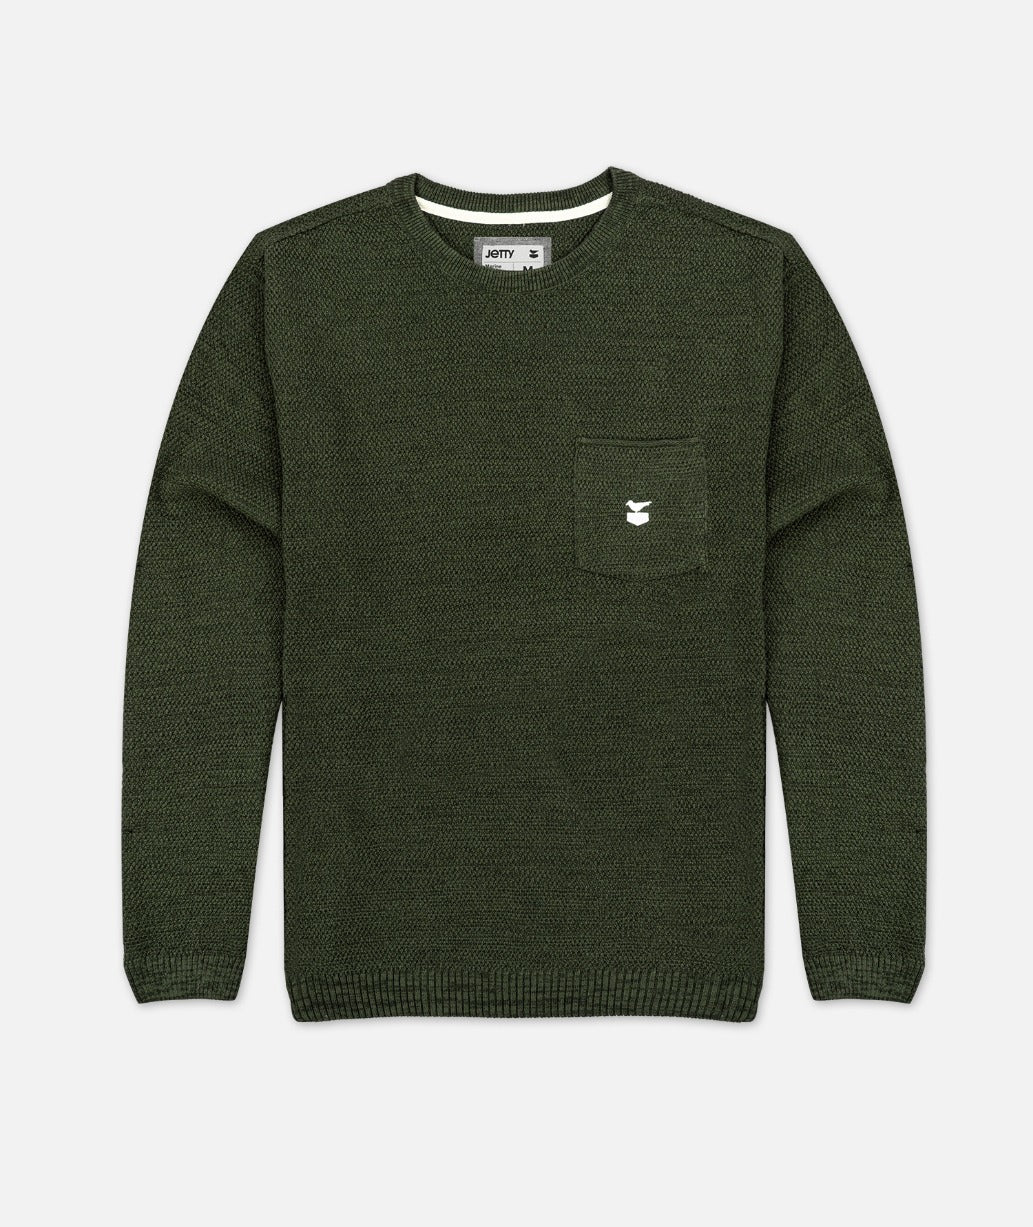 The Brine Sweater - Olive